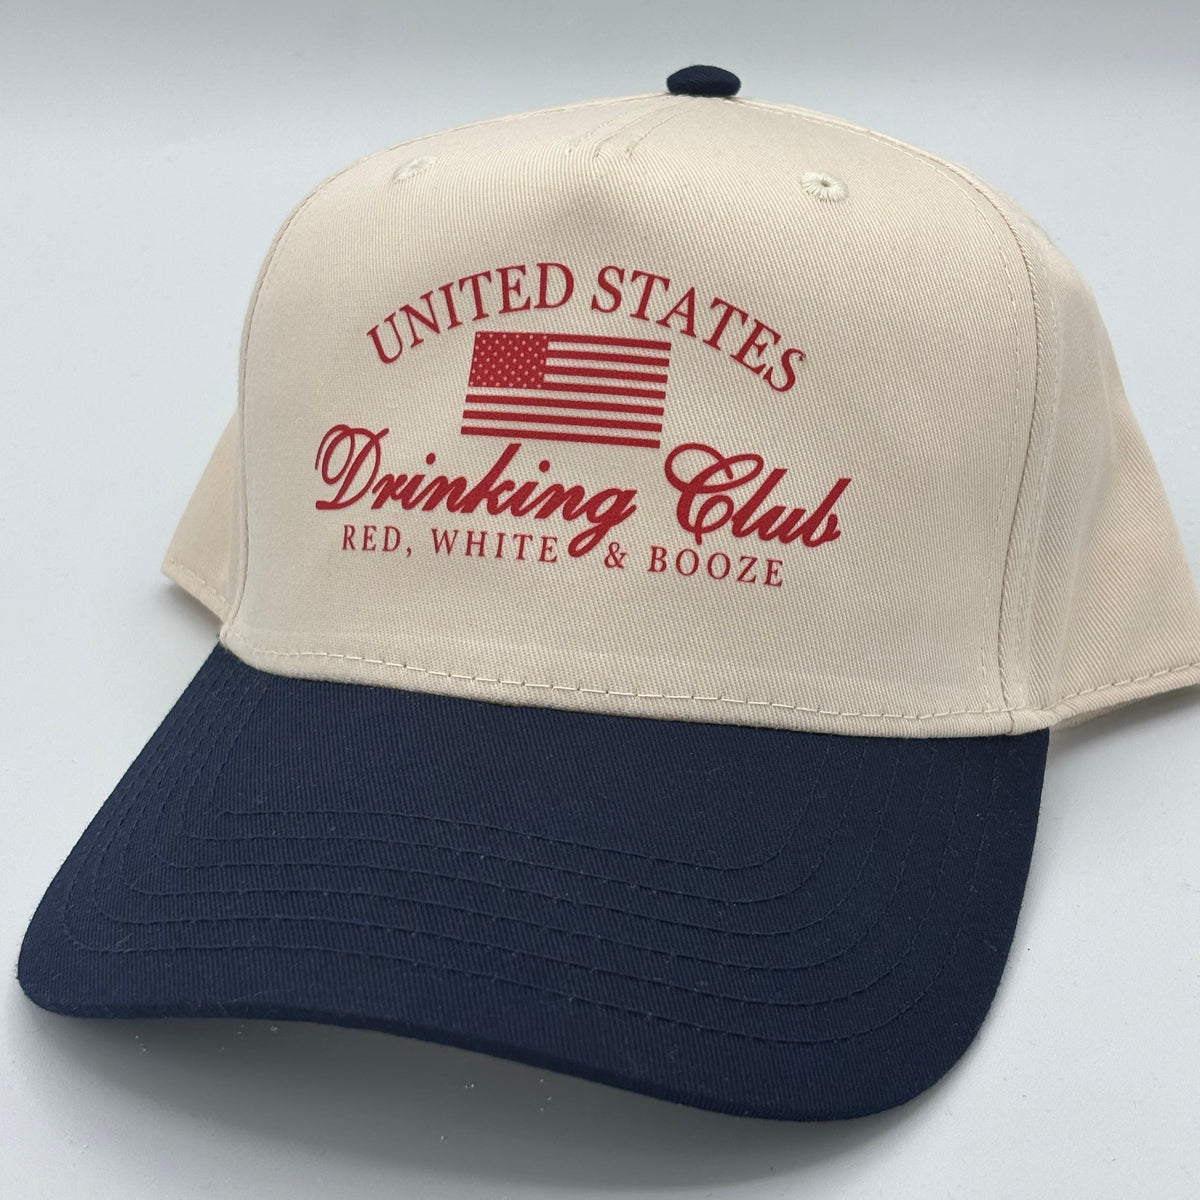 United States Drinking Club Hat